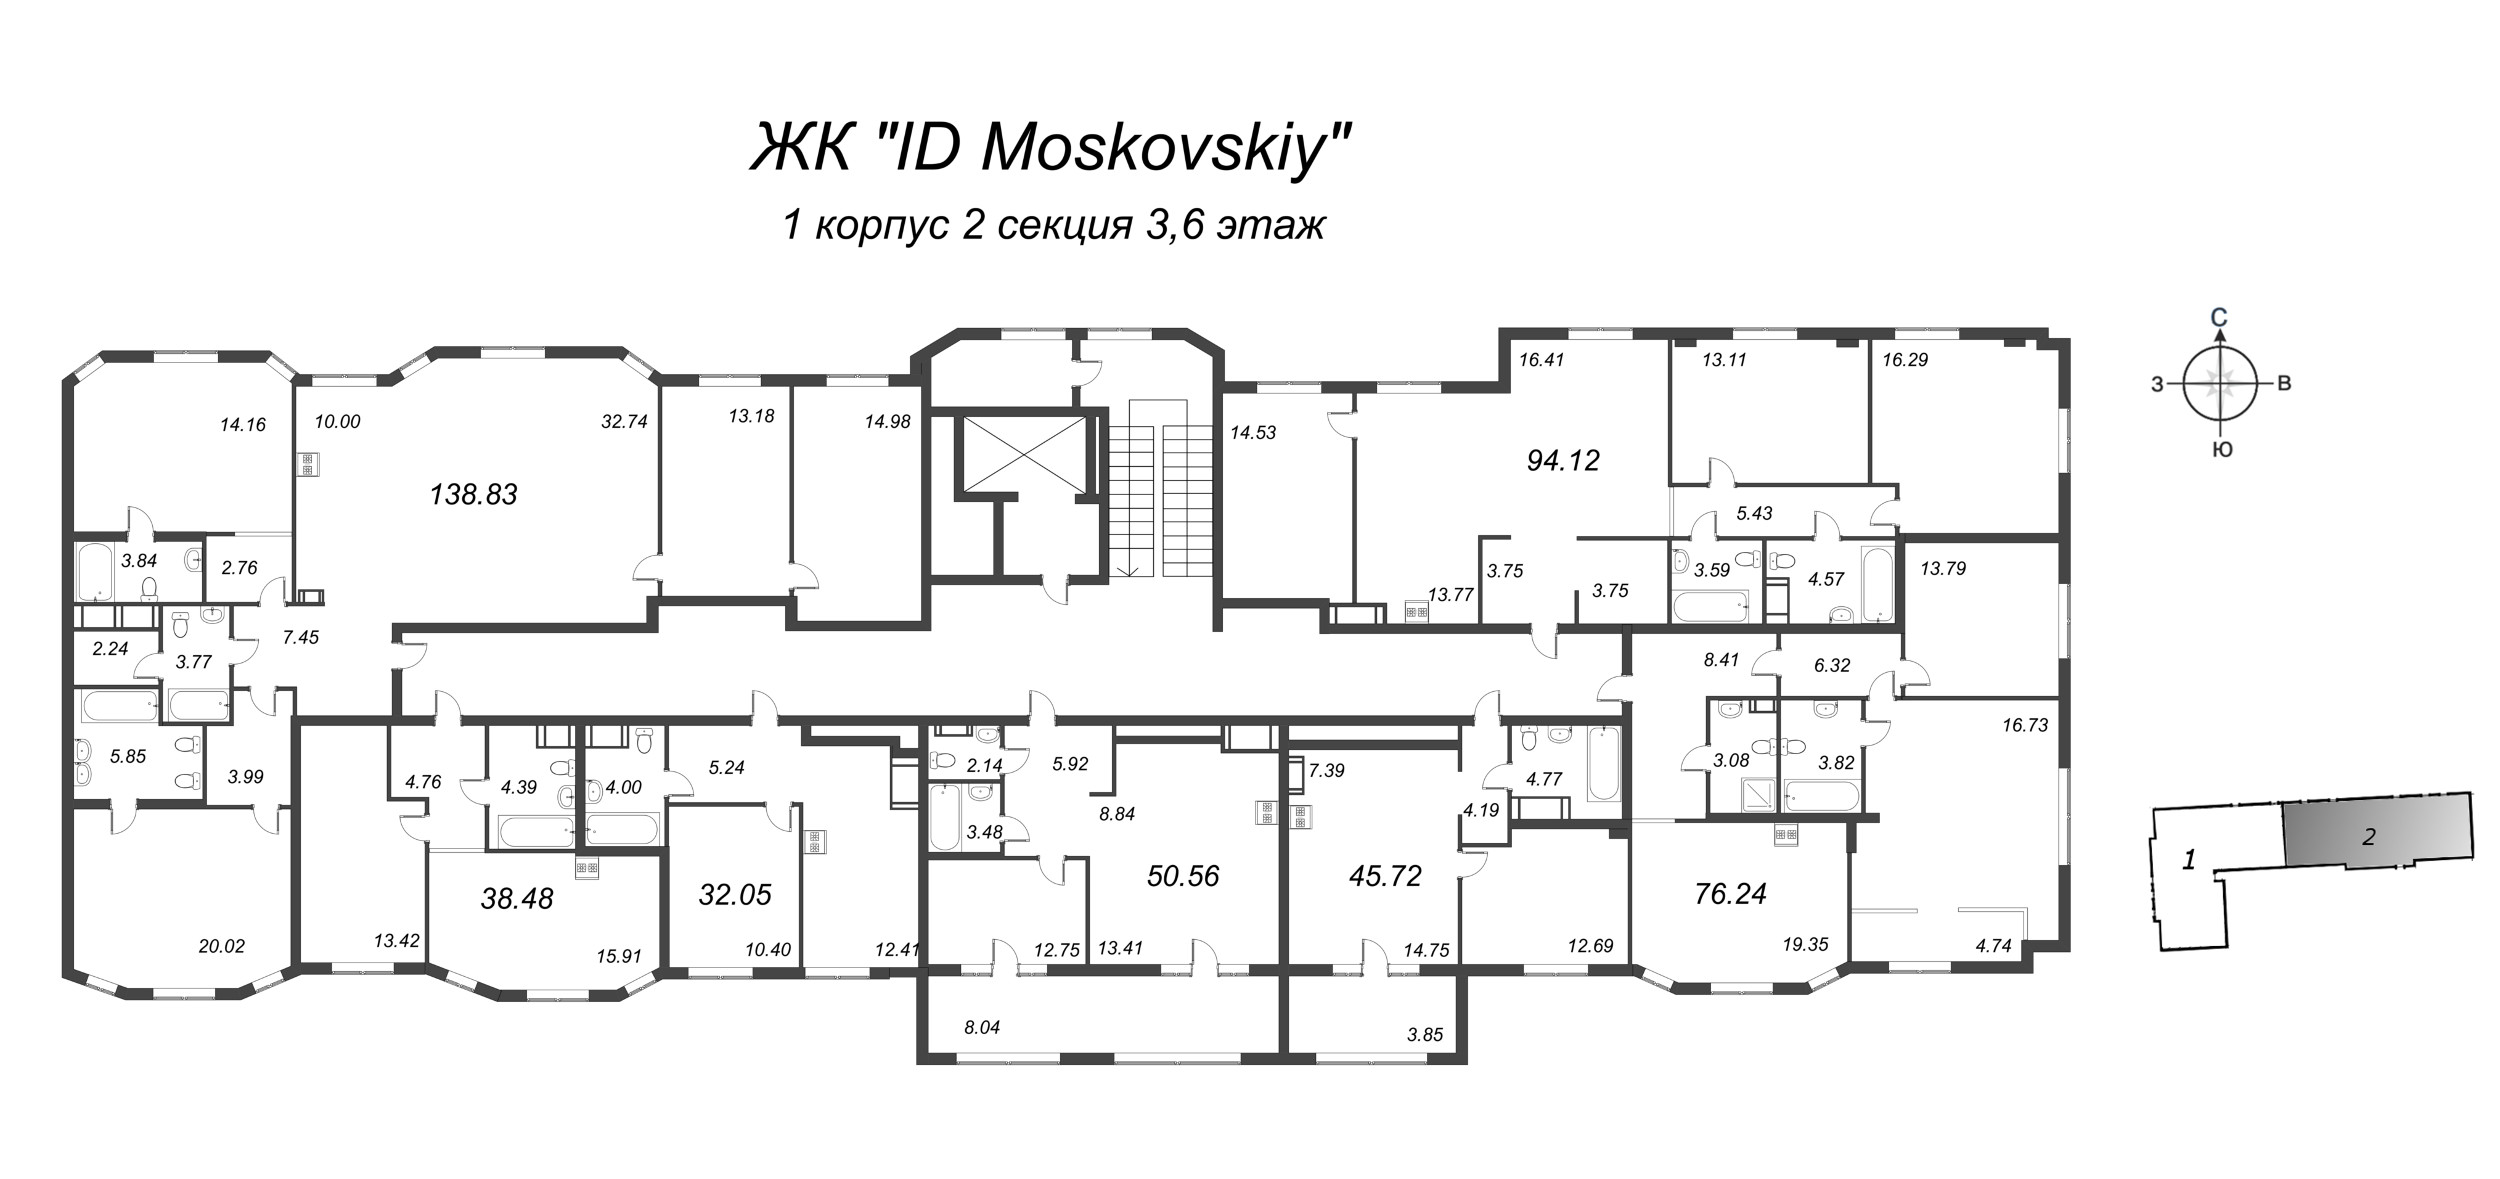 3-комнатная (Евро) квартира, 76.24 м² - планировка этажа